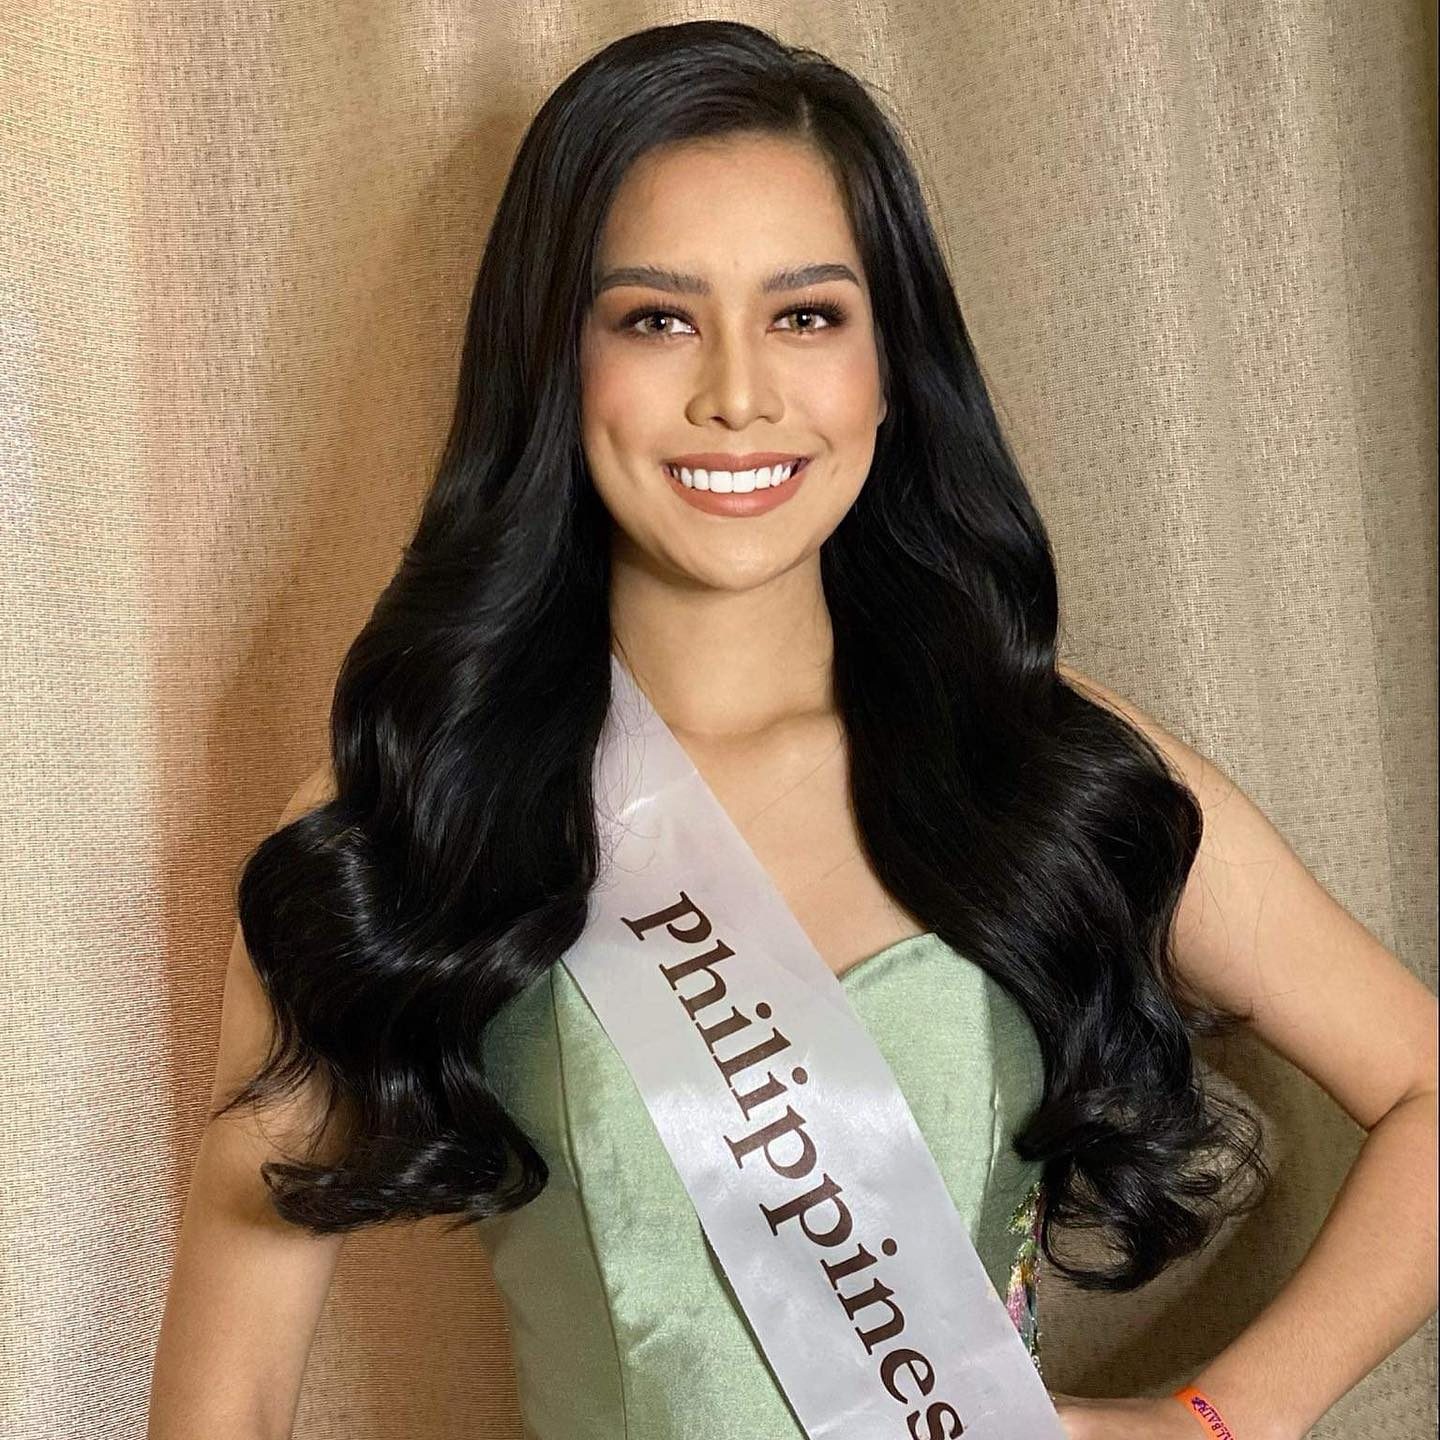 Philippines’ Roberta Tamondong wins Miss Eco Teen International 2020